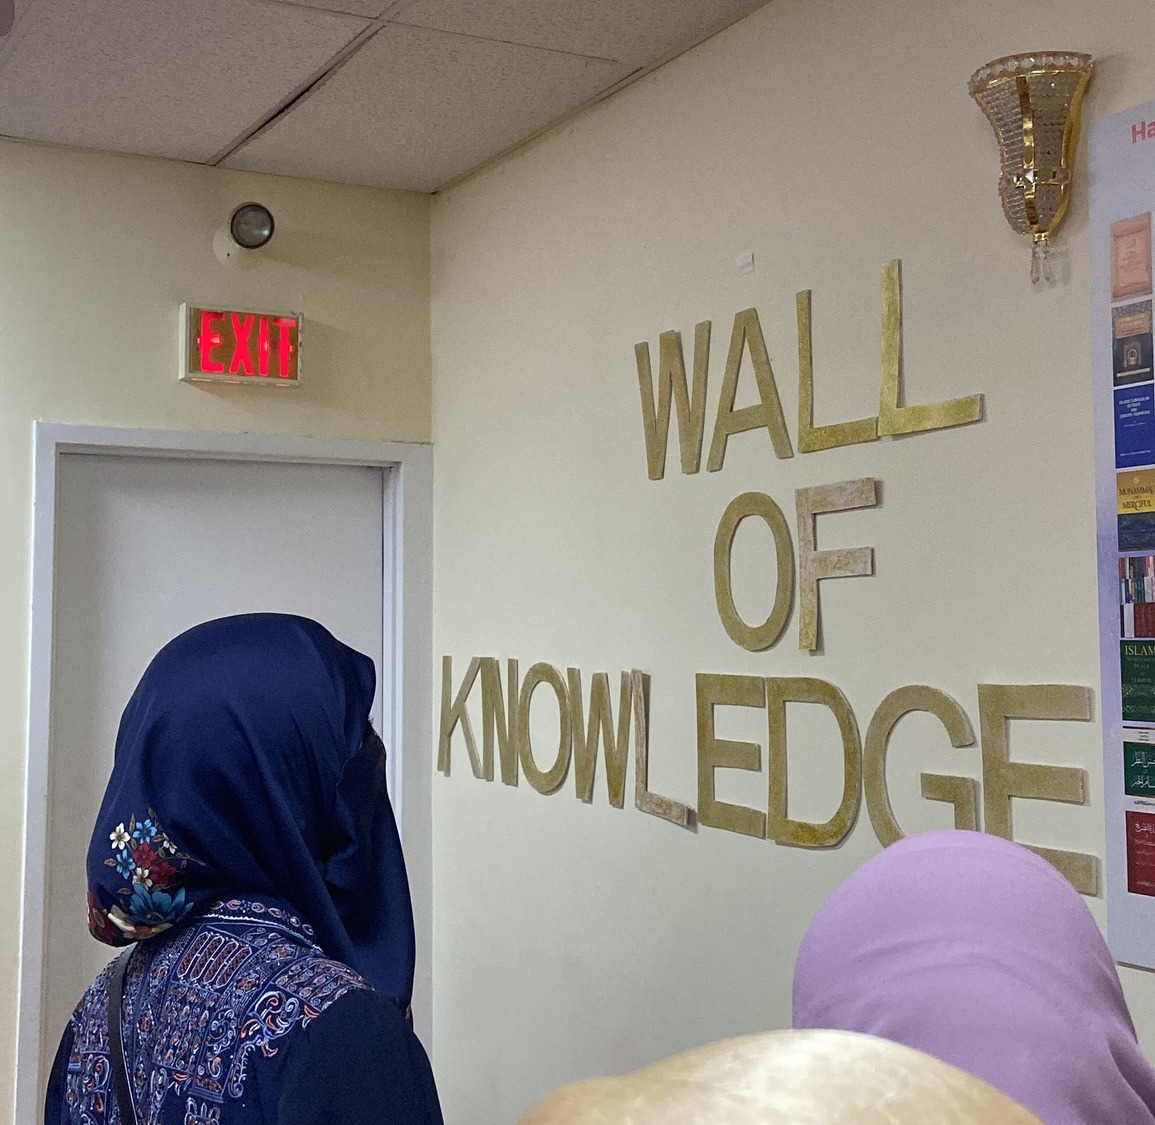 Wall-of-Knowledge-inaugurated-by-Dr-Ghazala-Qadri-An-Nasiha-Camp-Canada-2024_9